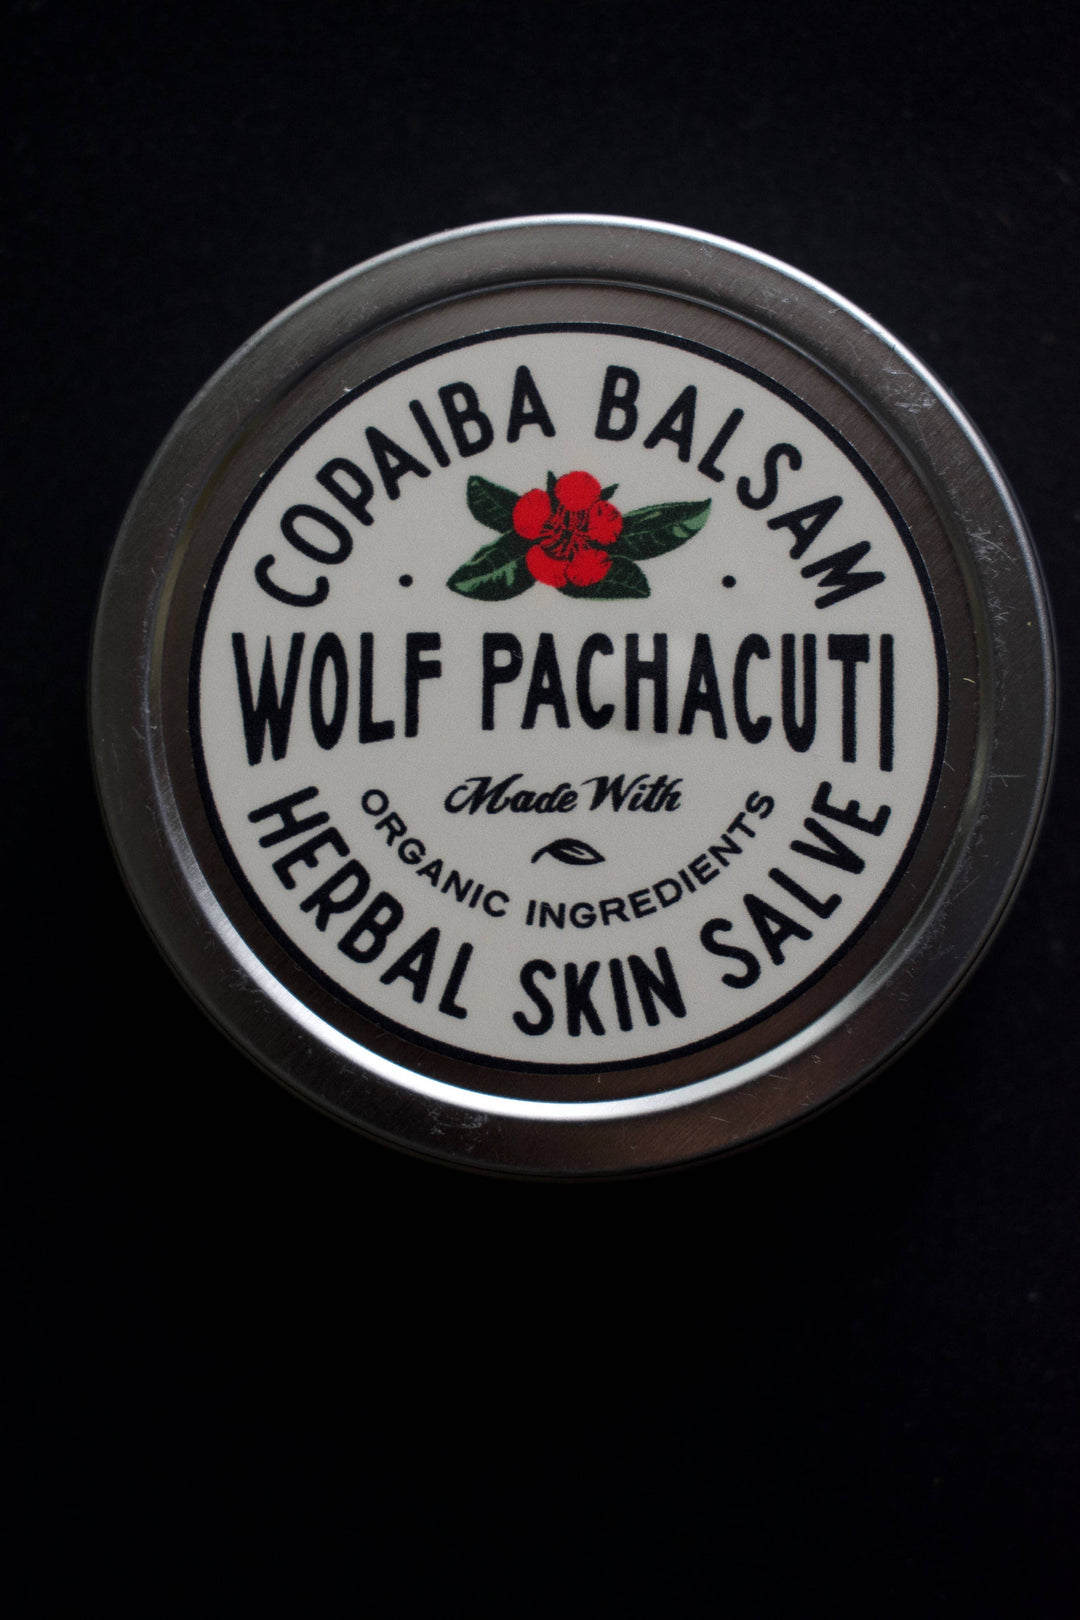 Copaiba Balsam Herbal Skin Salve